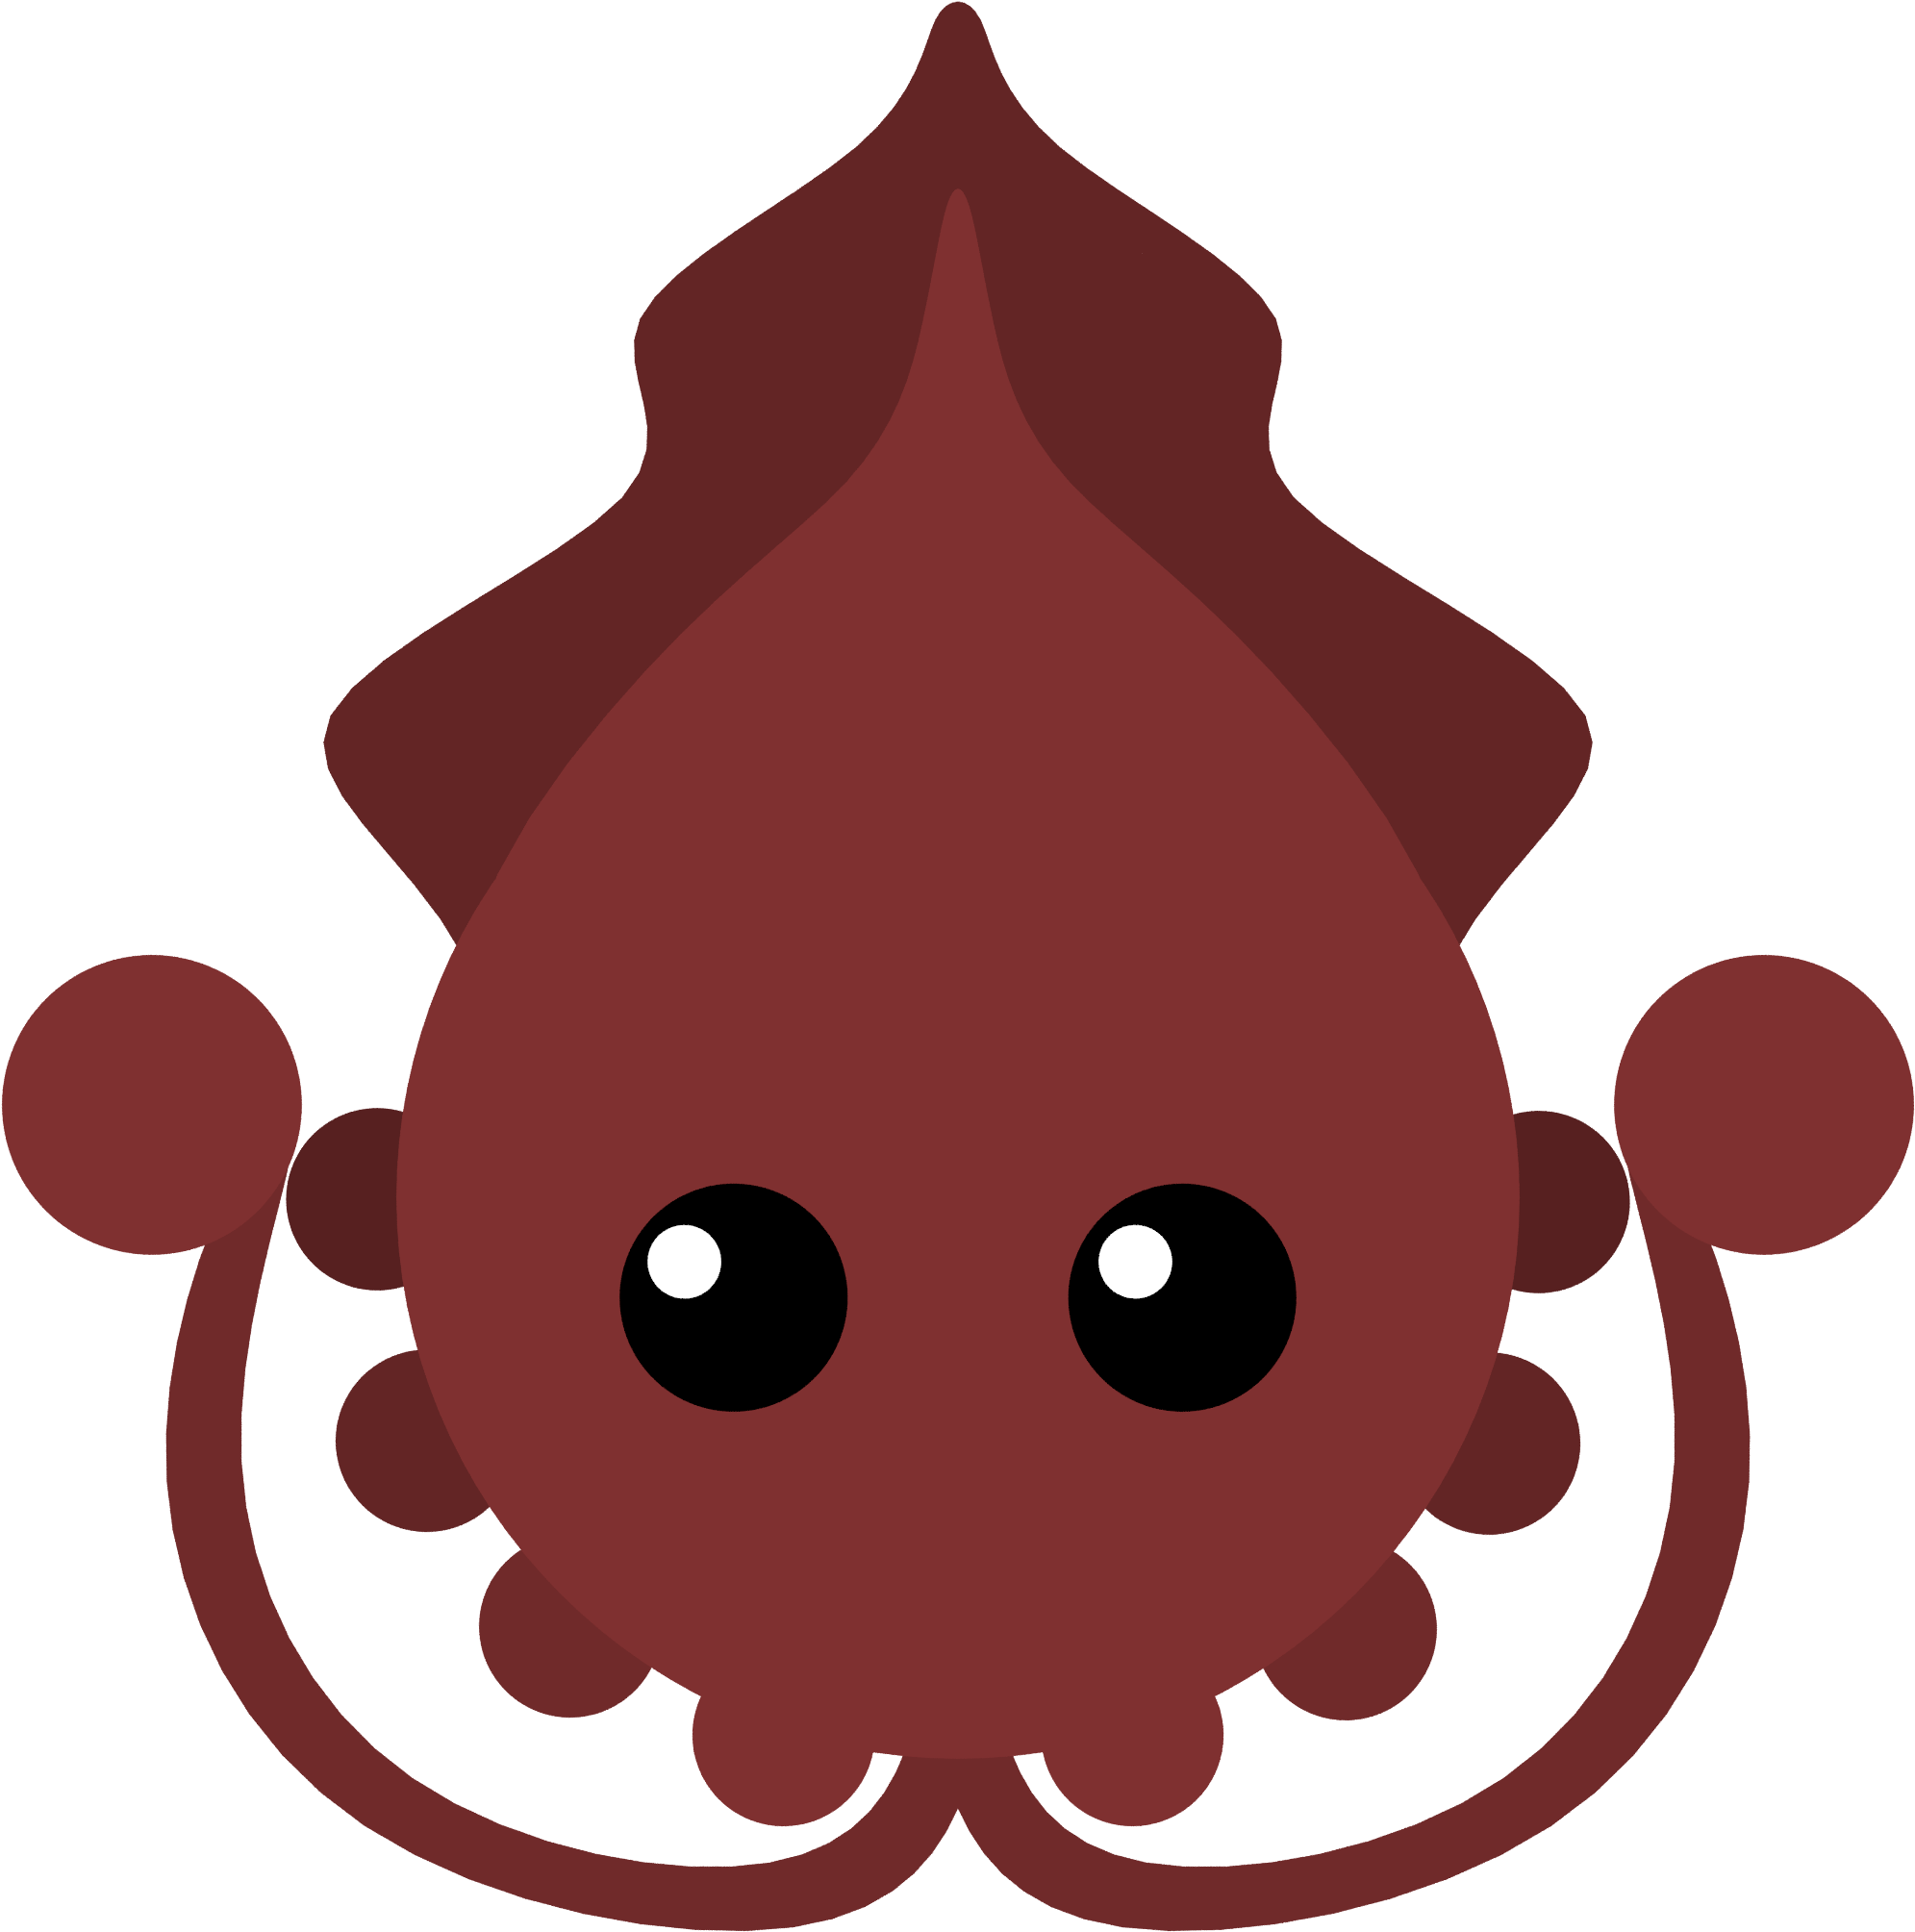 Just Art) Giant Squid Mopeio - Mope Io Giant Squid (2000x2234)